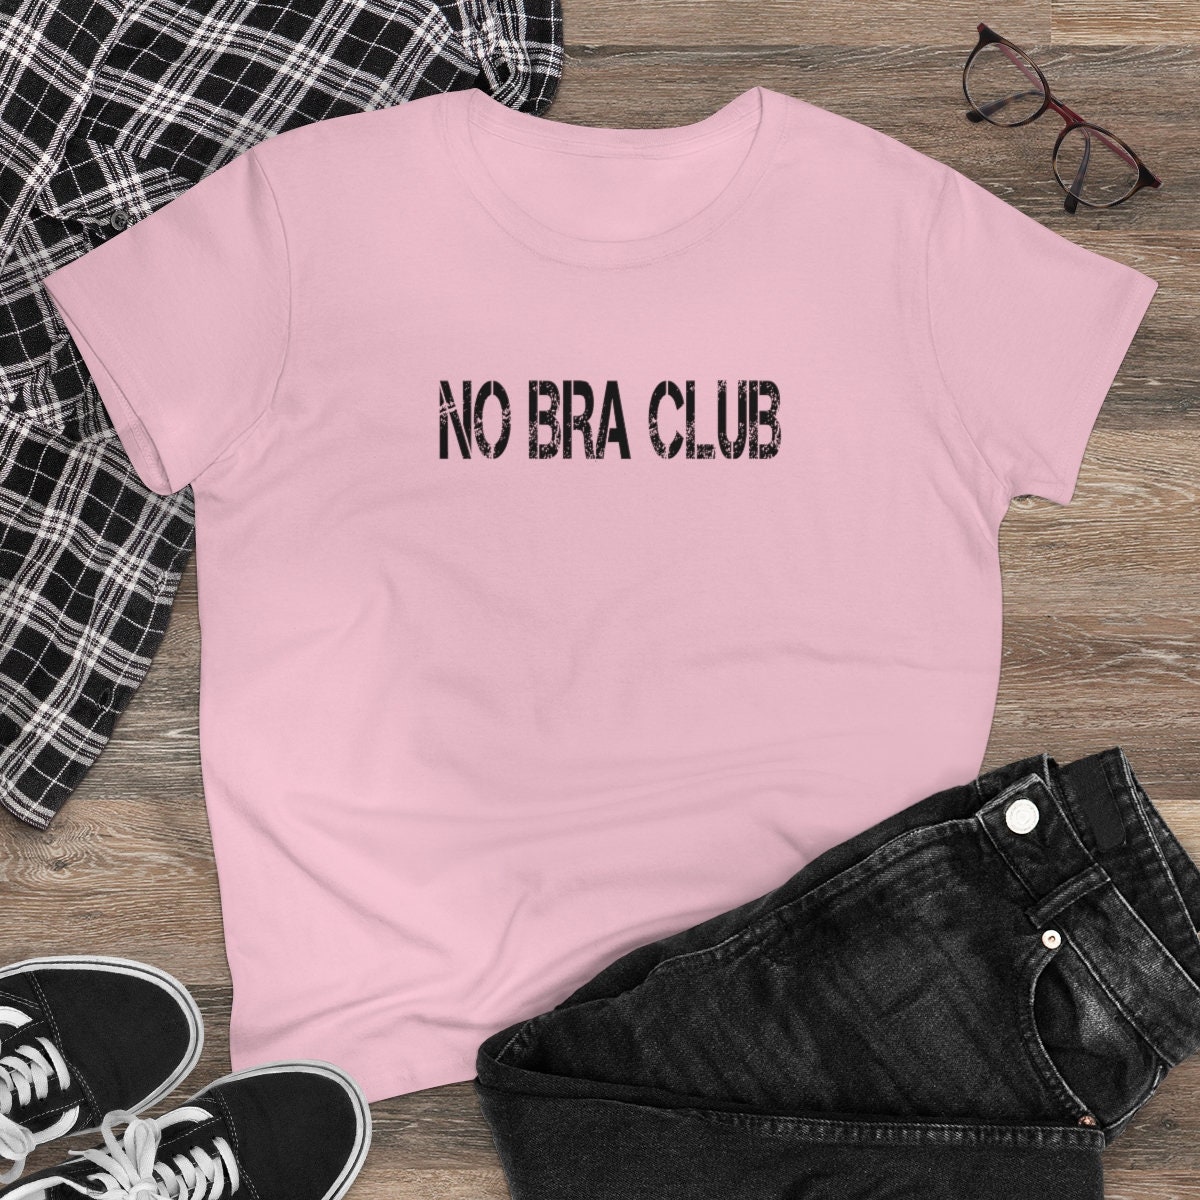 No Bra Women's Tank Top / No Bra Did You Notice / No Bra Club / Adult Humor  Shirt / Please Read the Size Chart -  Denmark